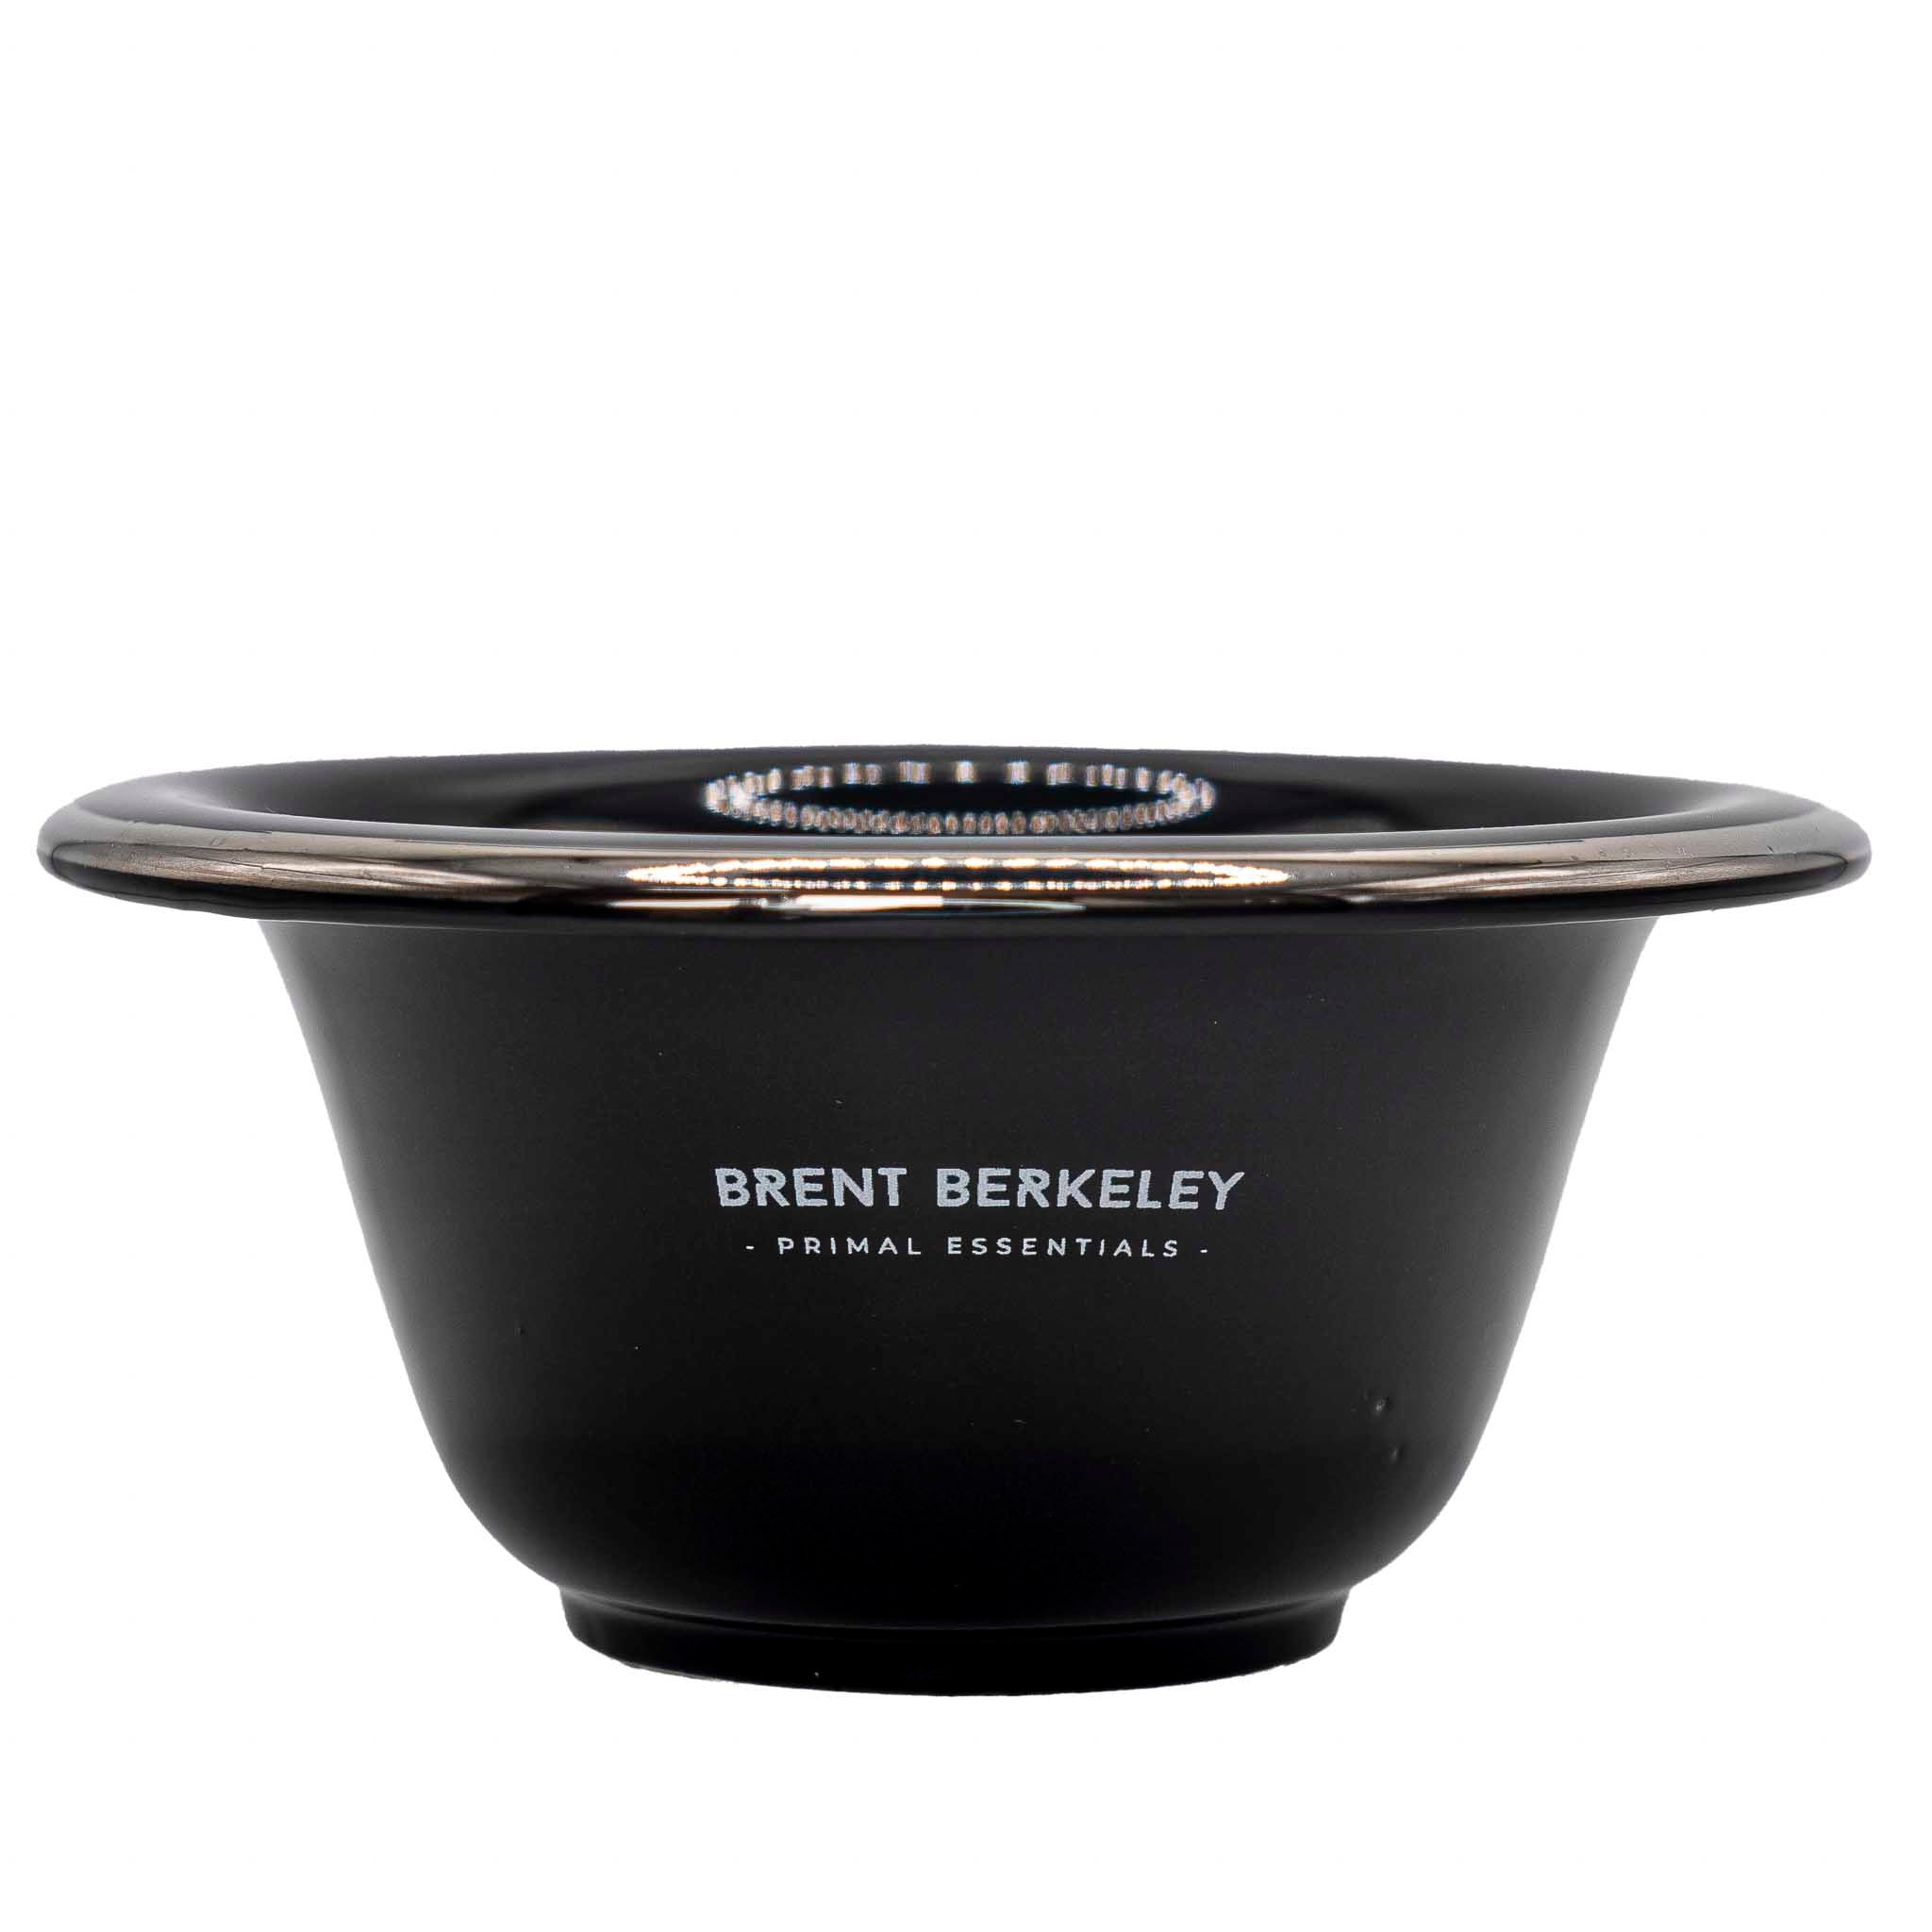 Brent Berkeley Porcelain Shaving Mug and soap tray